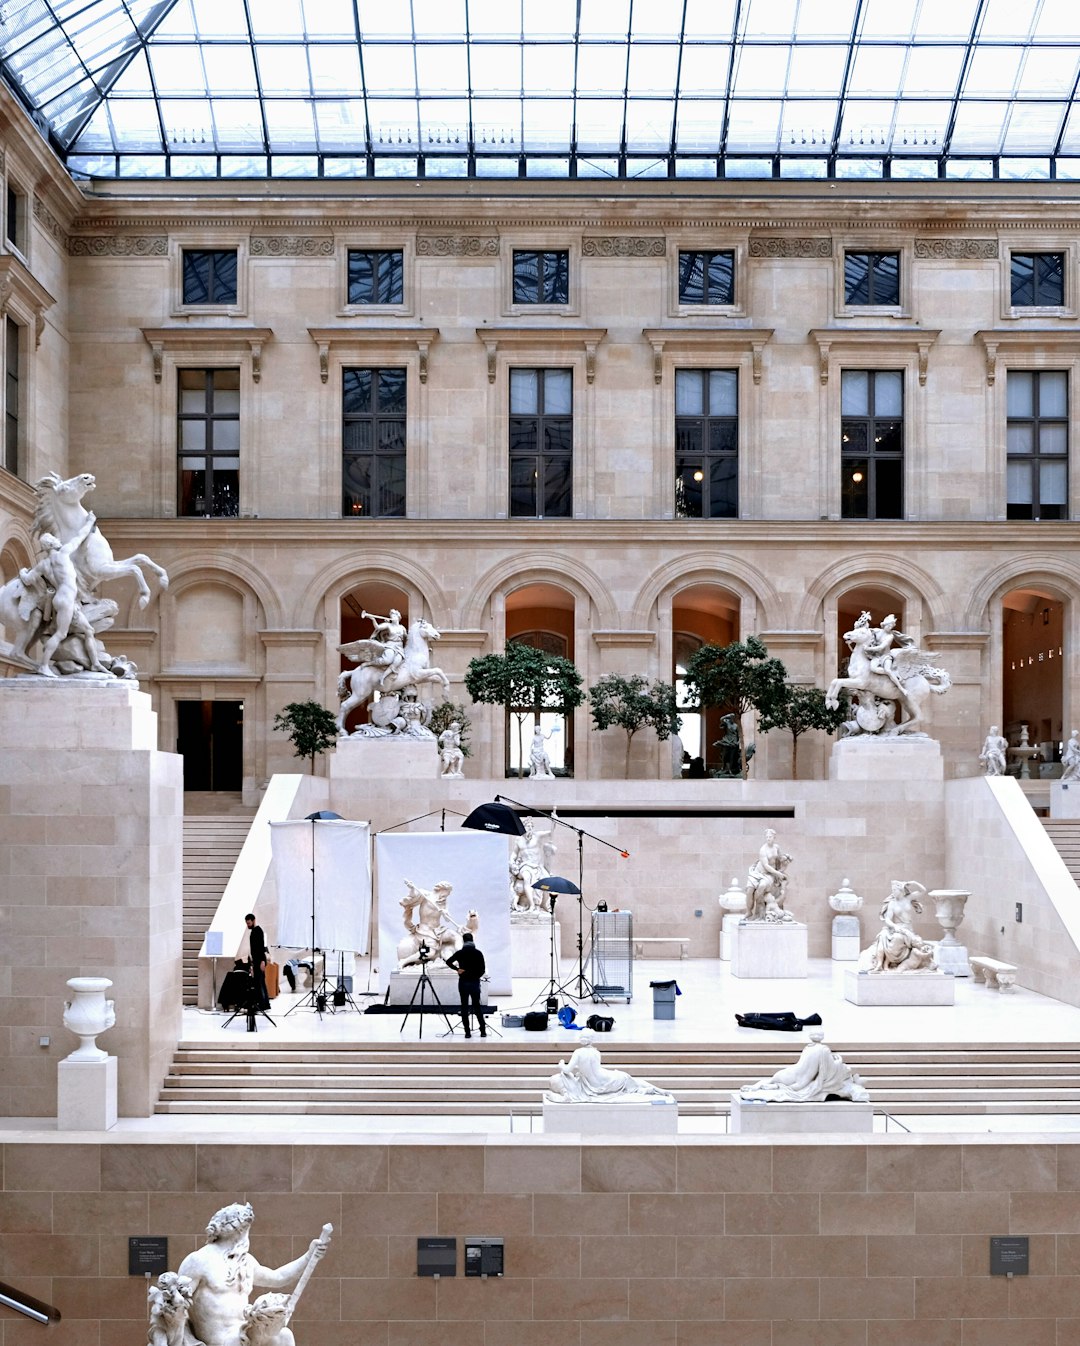 Какой париже музей. Музеи. Лувр. Париж. Музей Лувр в Париже (Франция).. Музей Лувр в Париже внутри. Департамент Лувр.